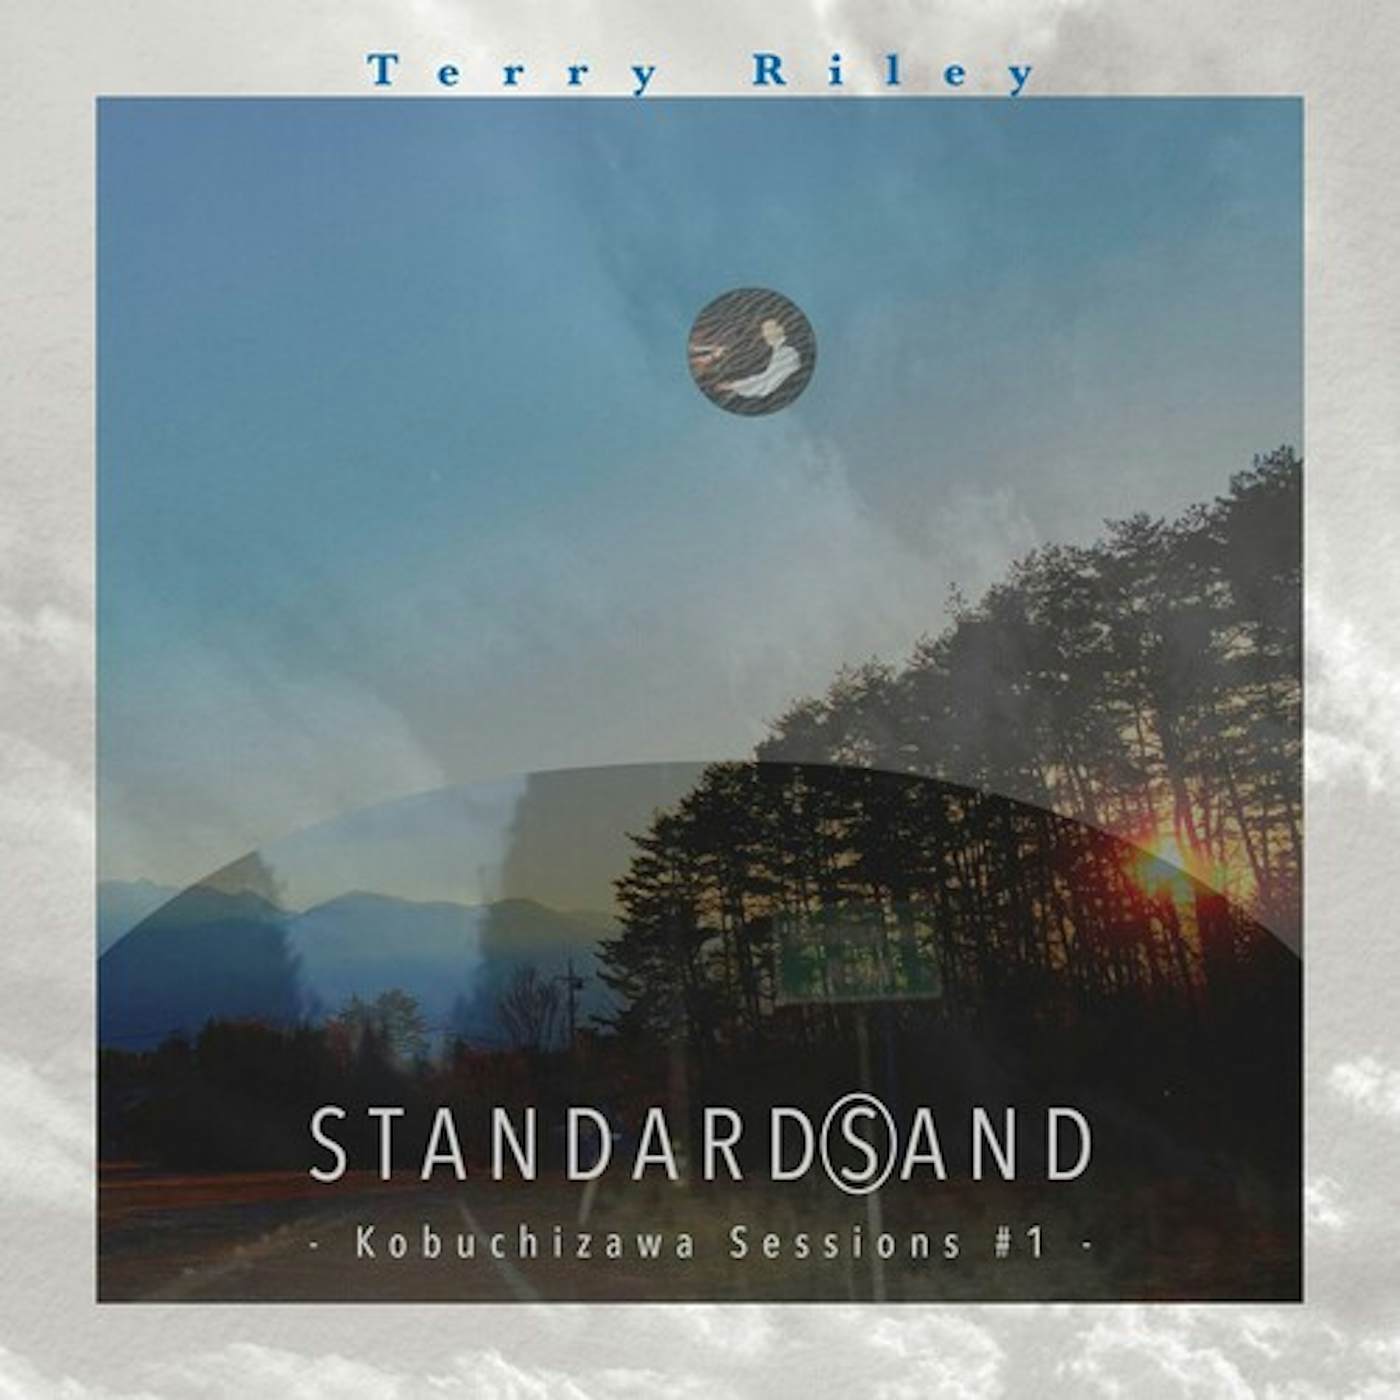 Terry Riley STANDARD(S)AND: KOBUCHIZAWA SESIONS #1 CD